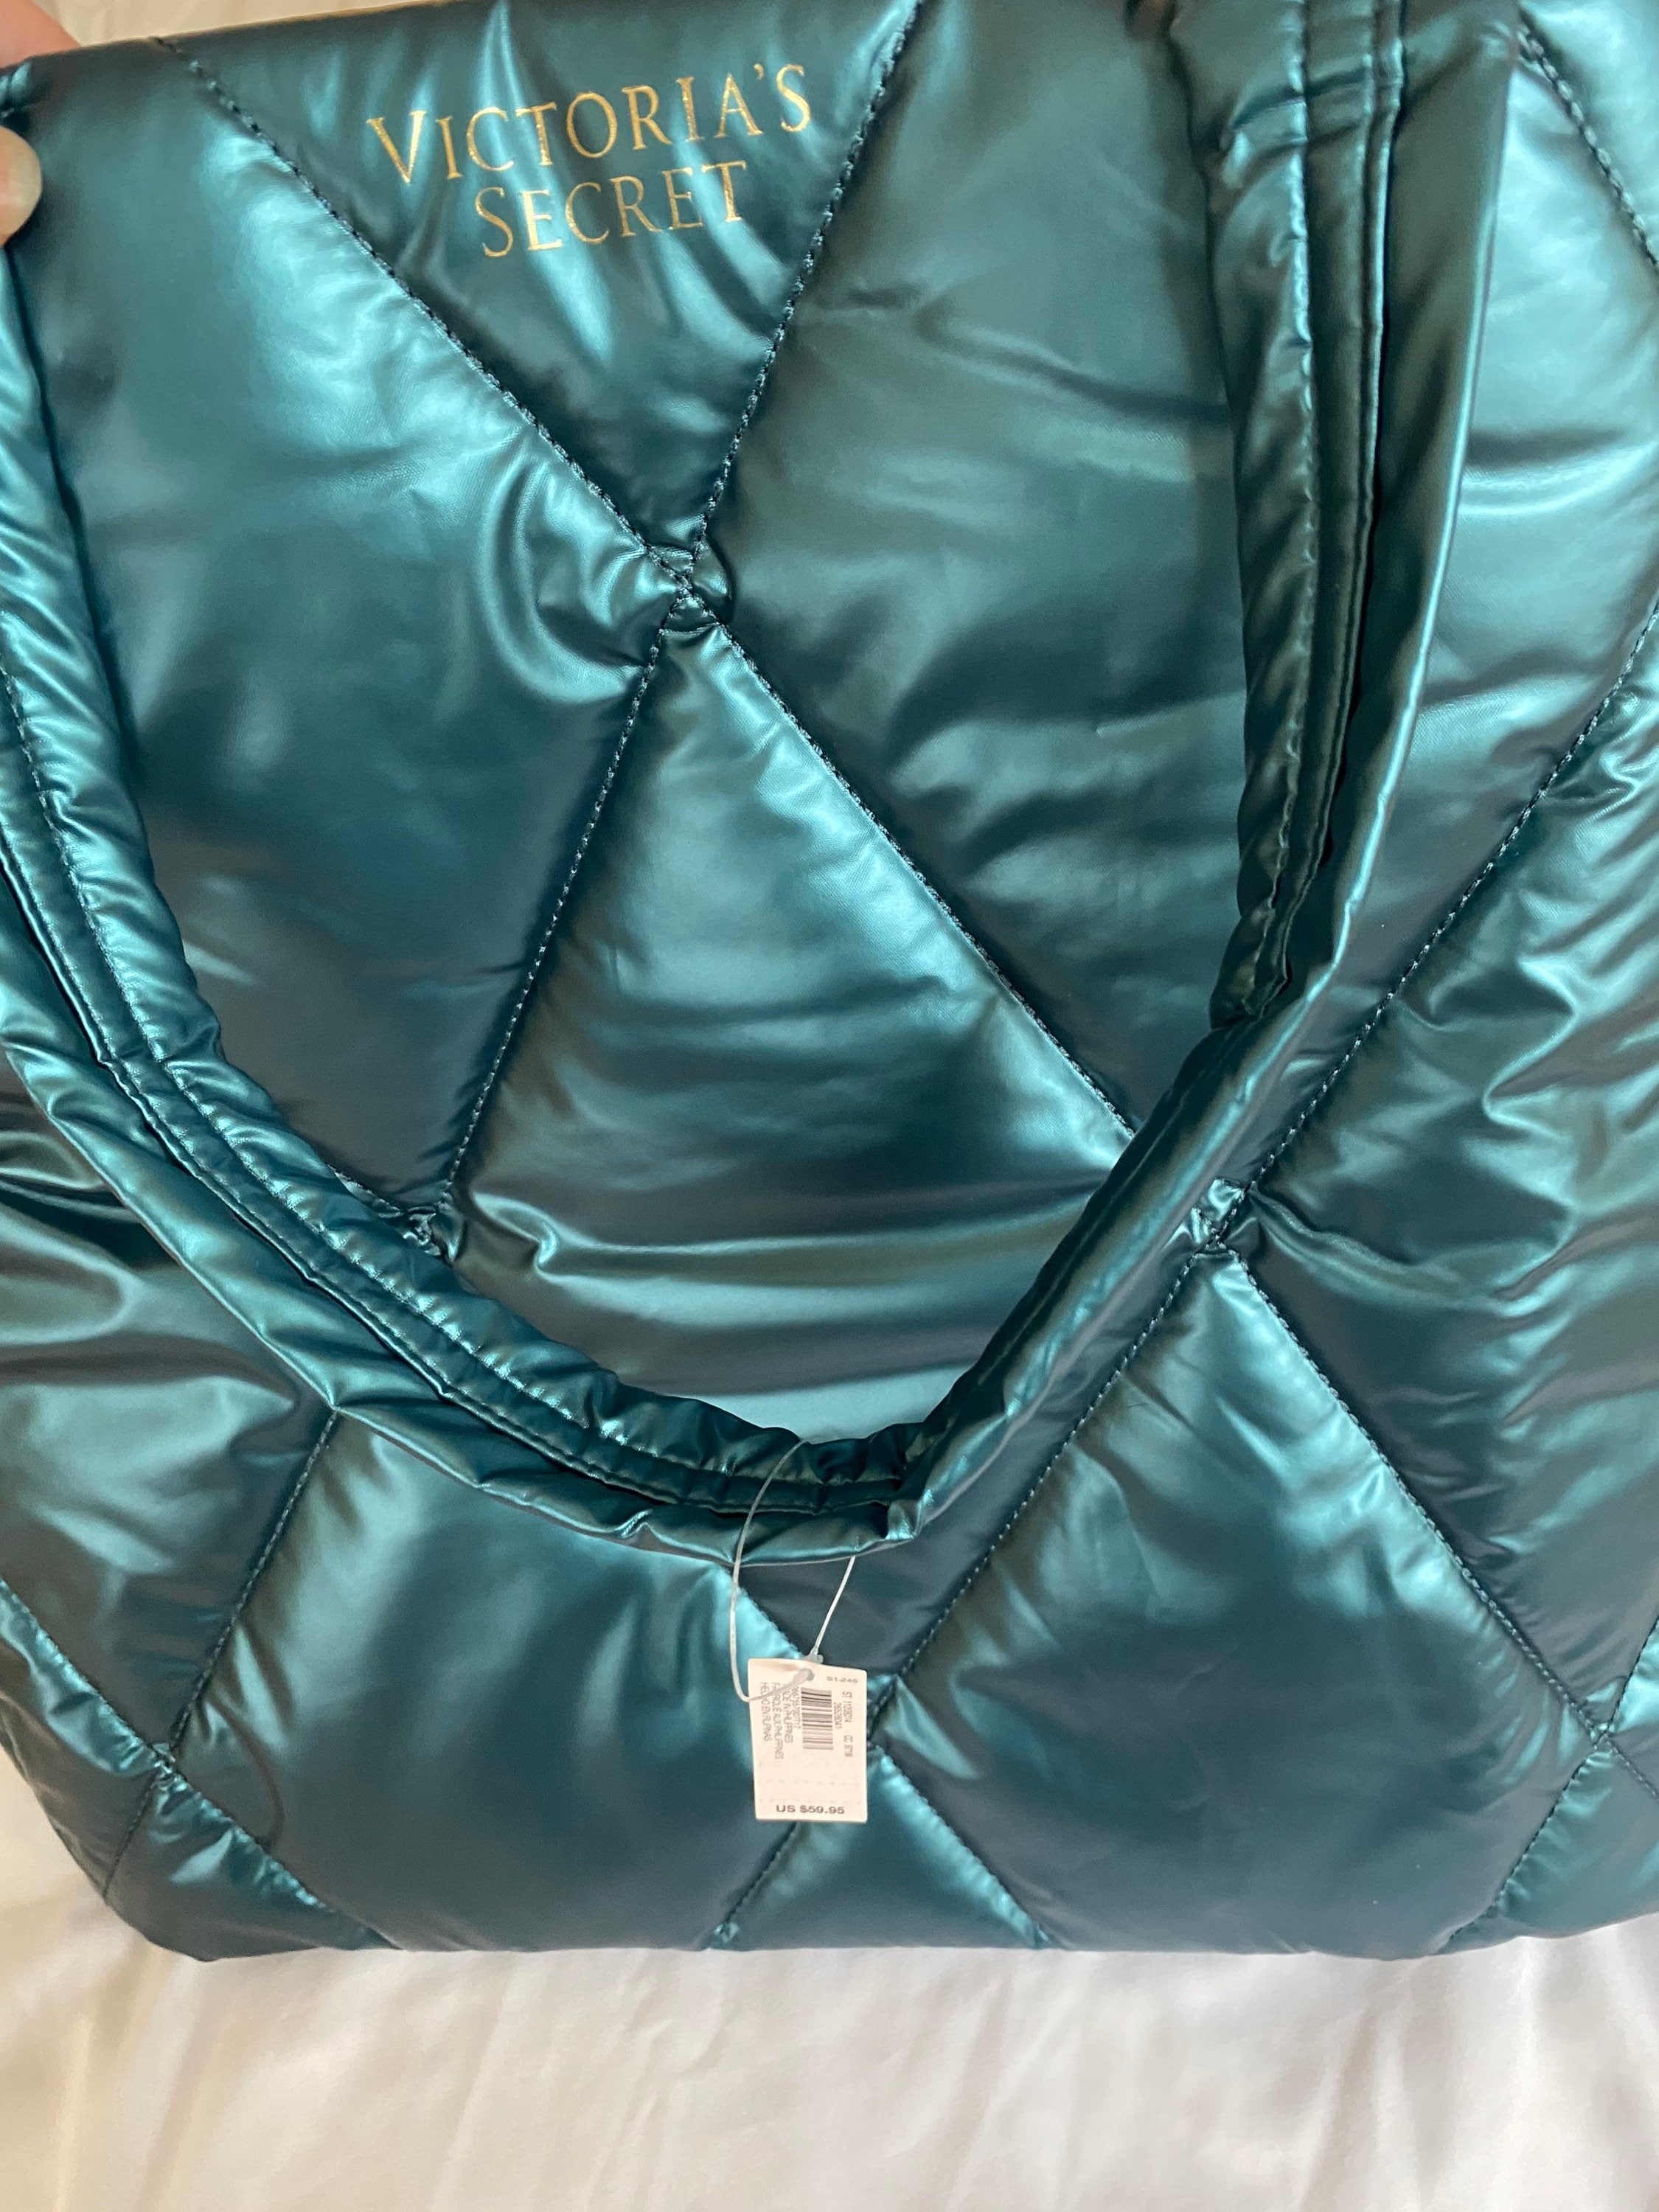 ORIGINAL 💯 Victoria Secret Tote Bag